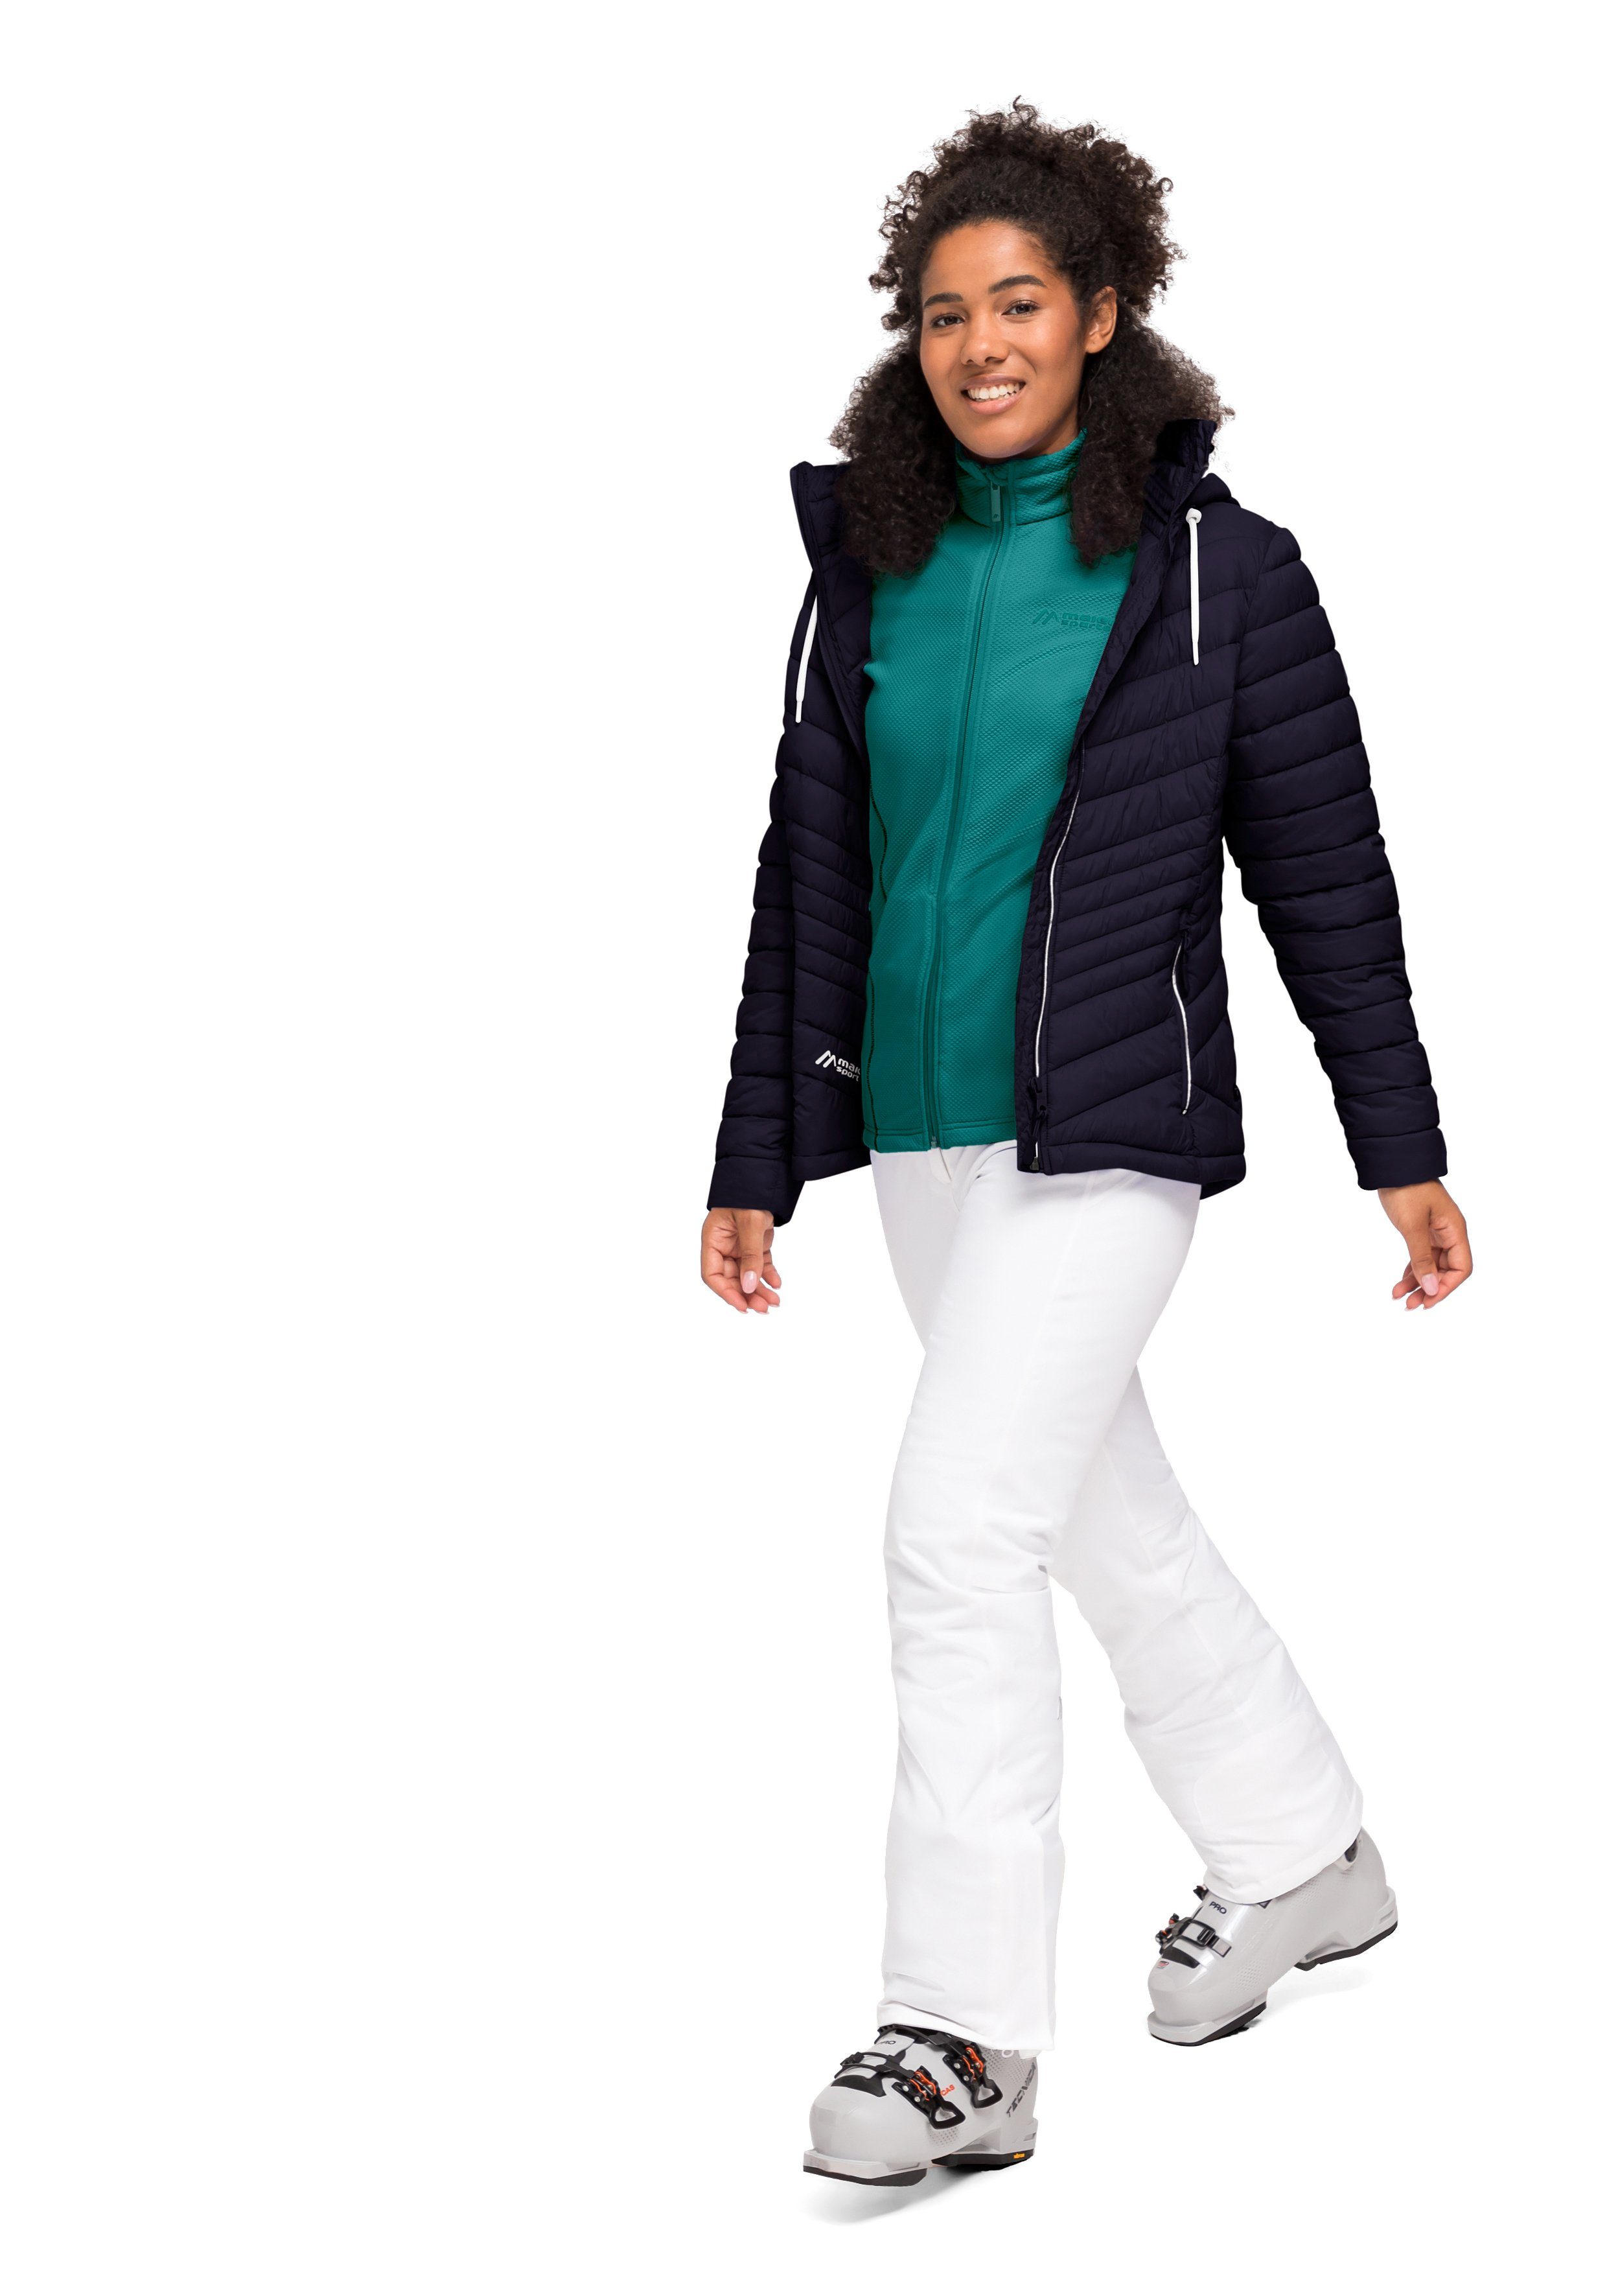 zum Fleecejacke Damen Sports Midlayer, warme Funktionsshirt Skifahren als Ximena Maier seegrün ideal